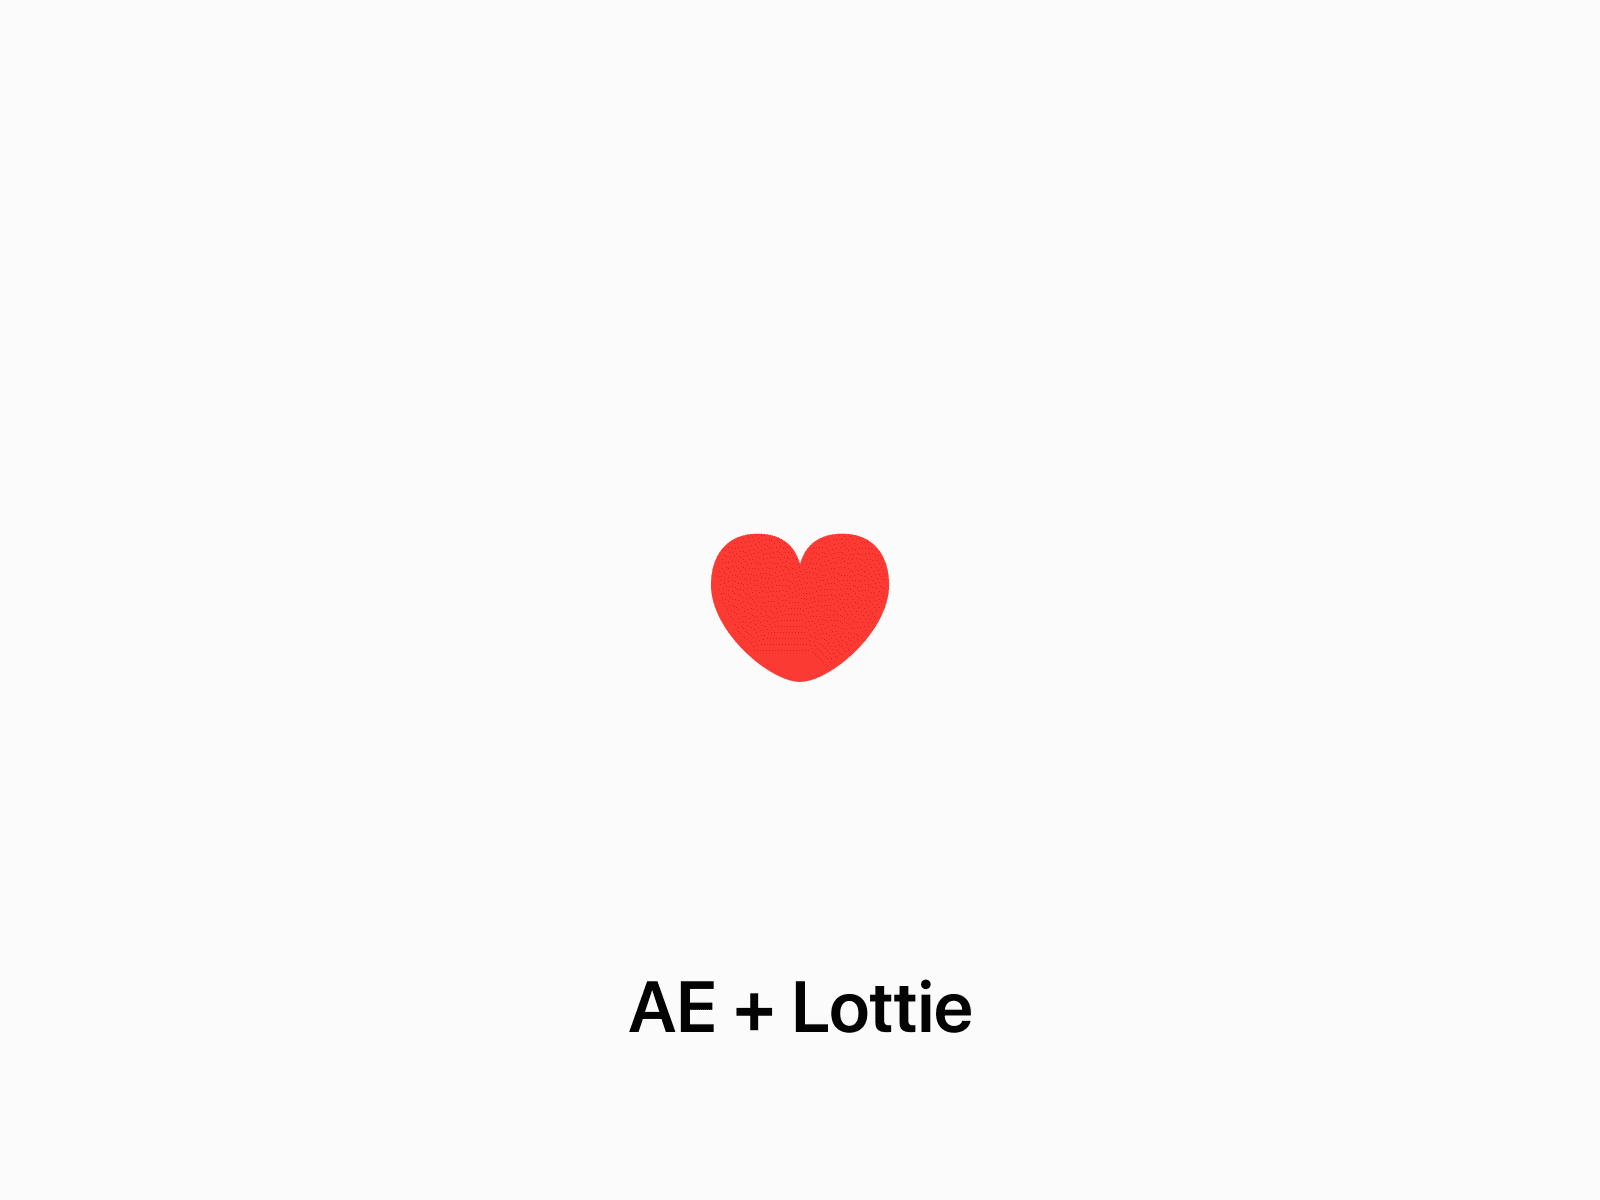 Heart Like Animation AE + Lottie